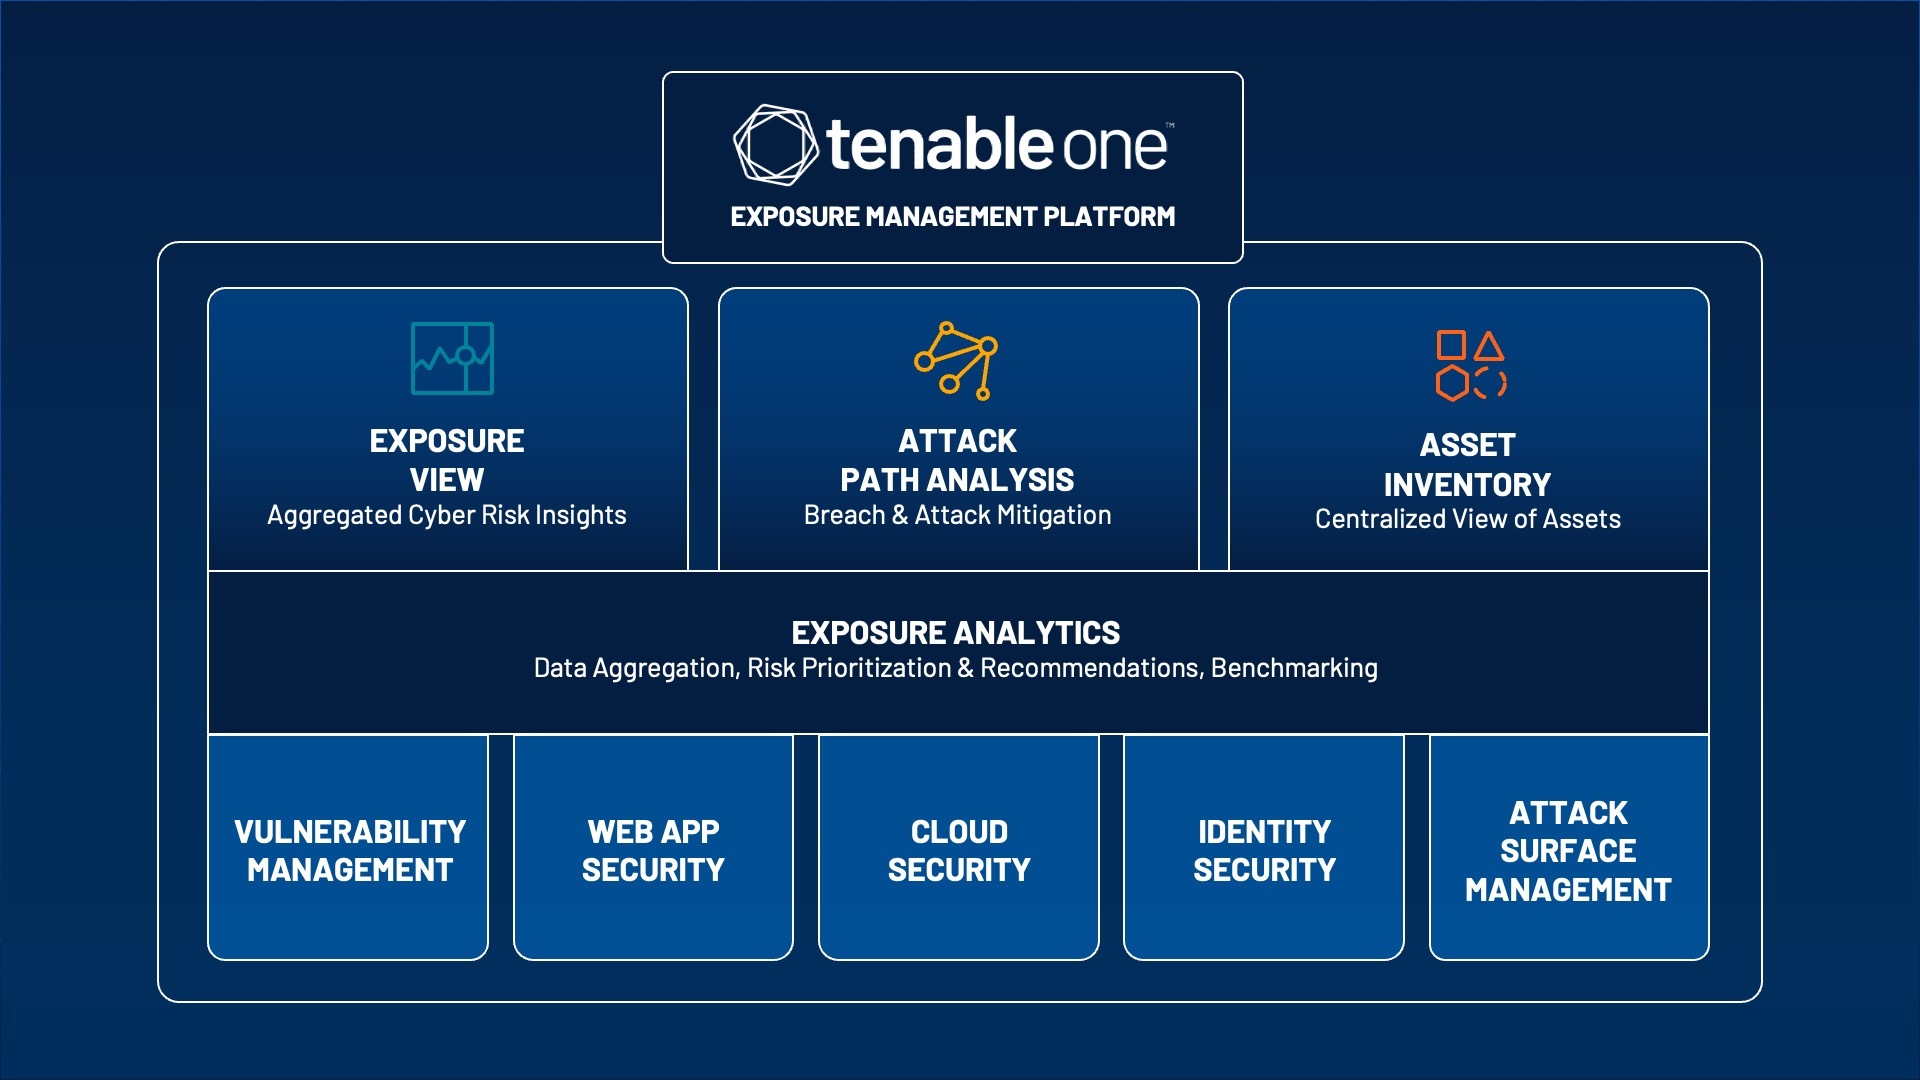 Die neue Exposure Management-Plattform Tenable One